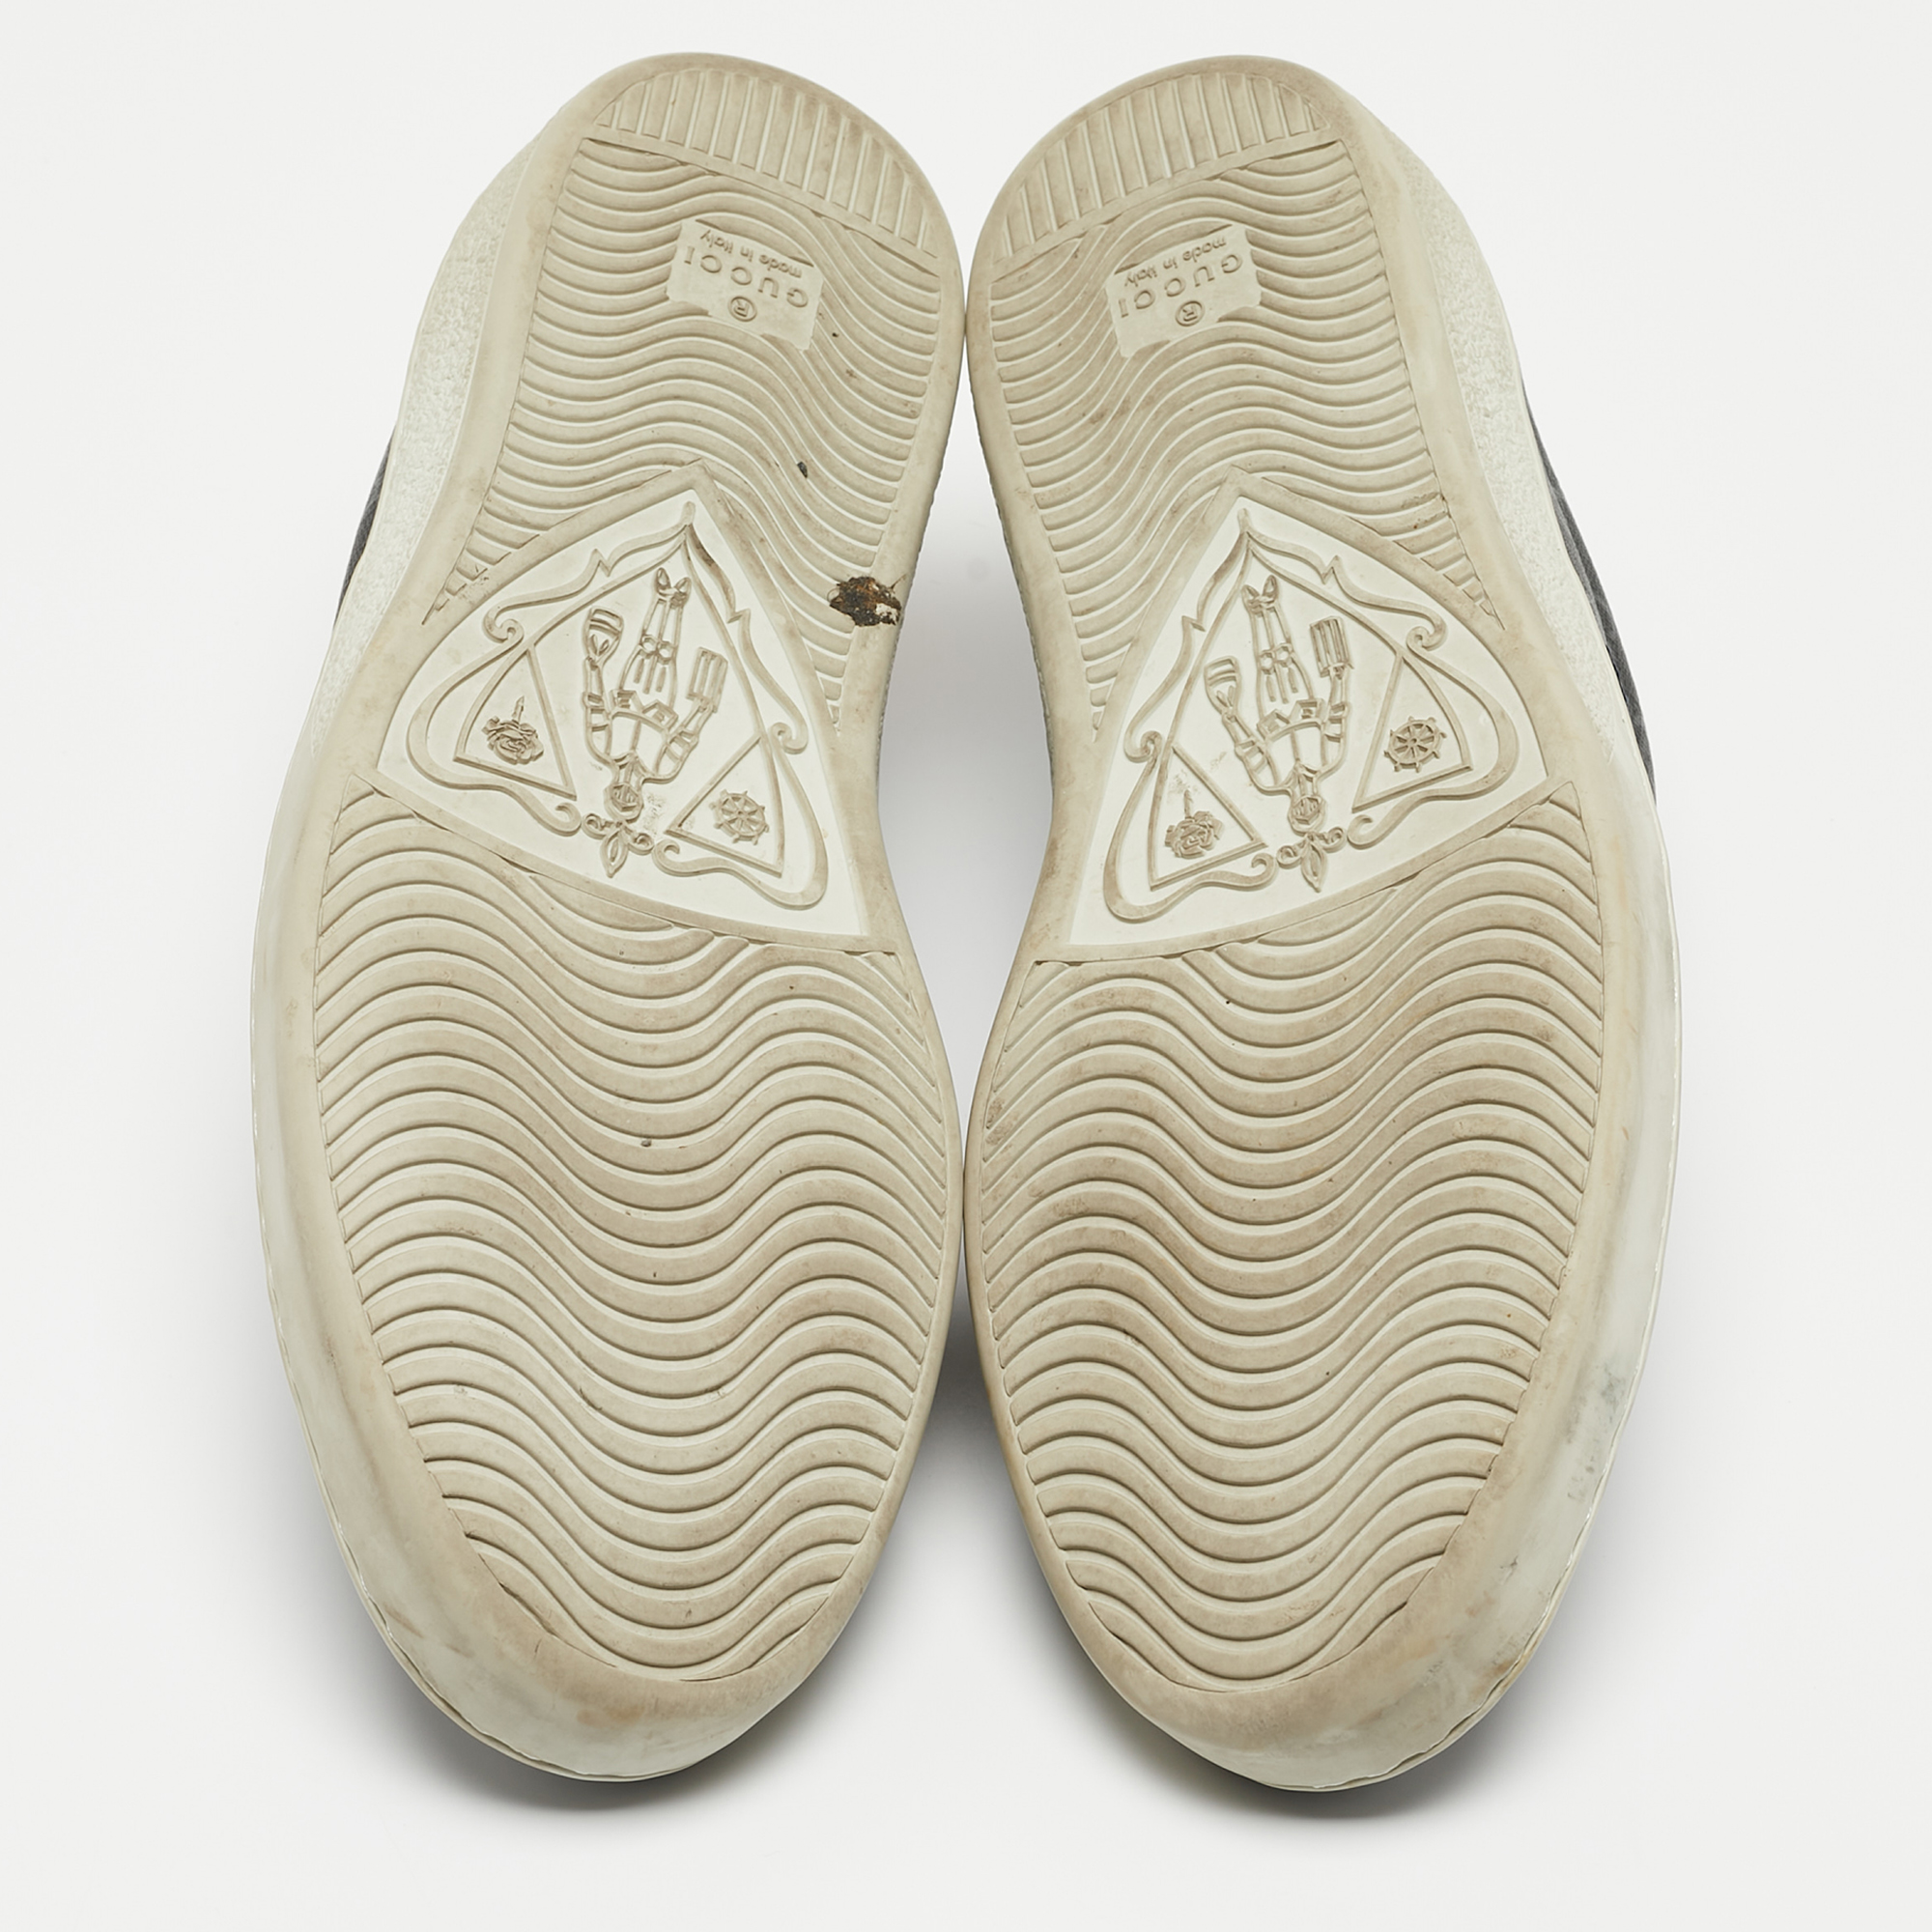 Gucci Two Tone GG Supreme Canvas Ace Sneakers Size 42.5